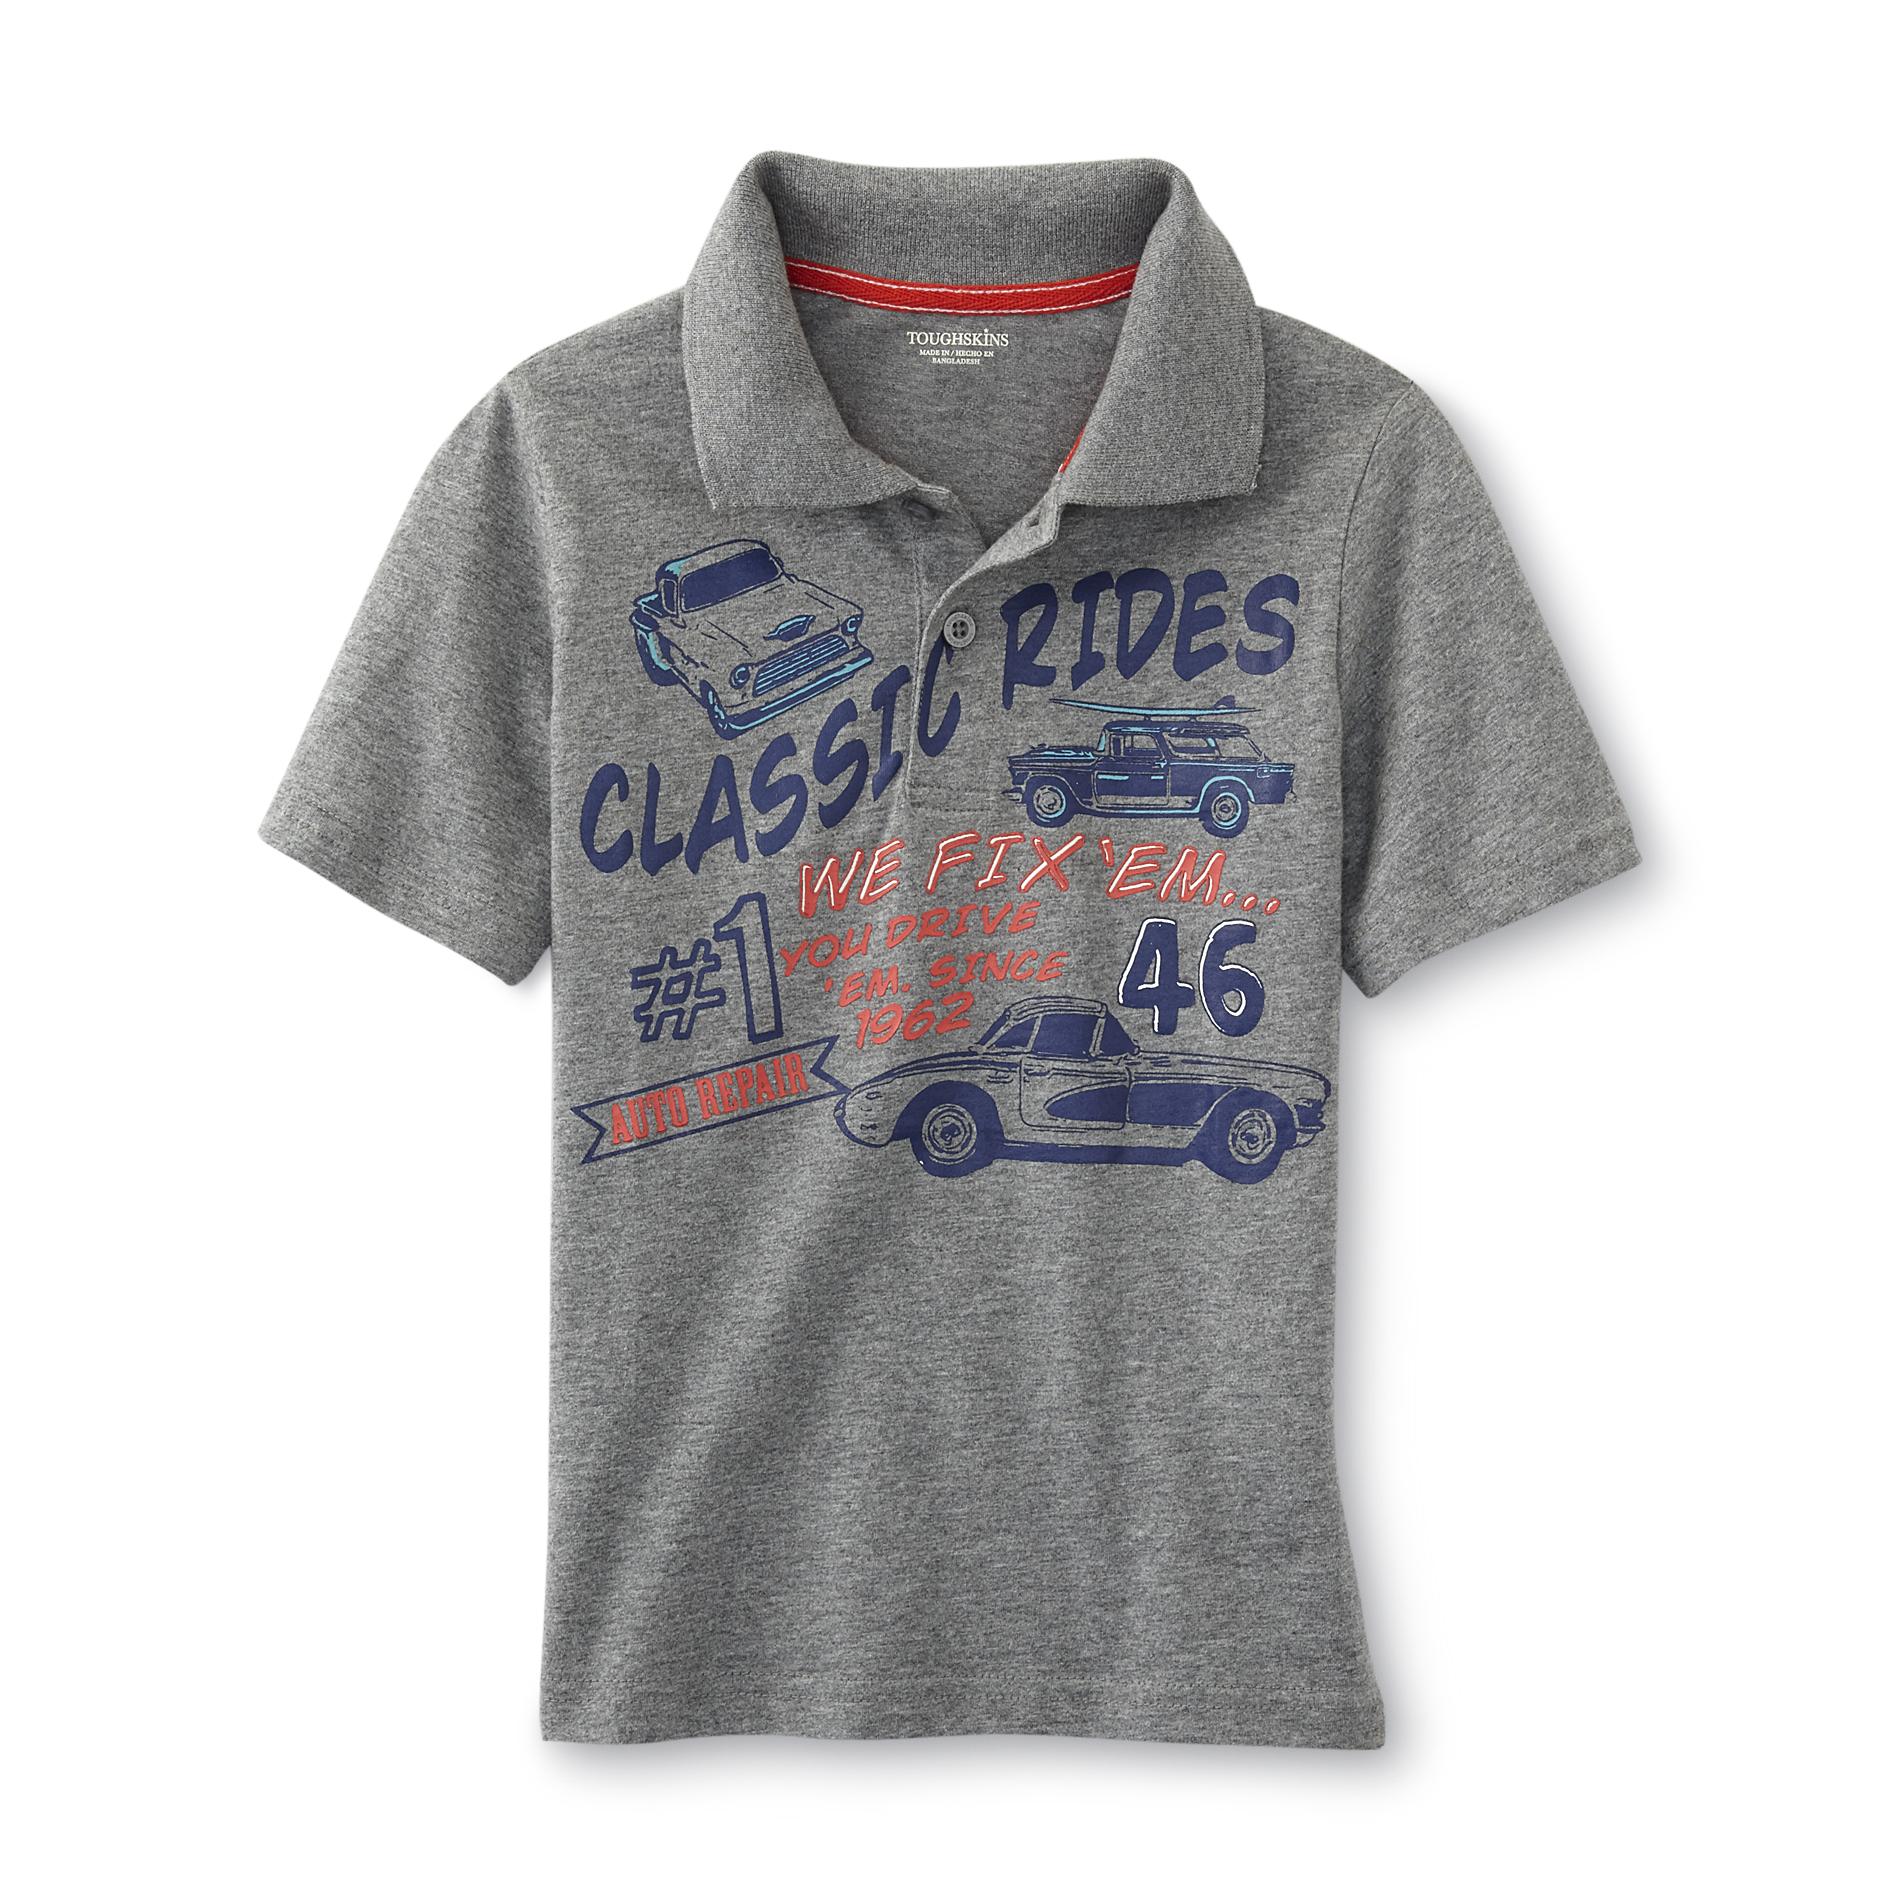 Toughskins Infant & Toddler Boy's Polo Shirt - Classic Rides